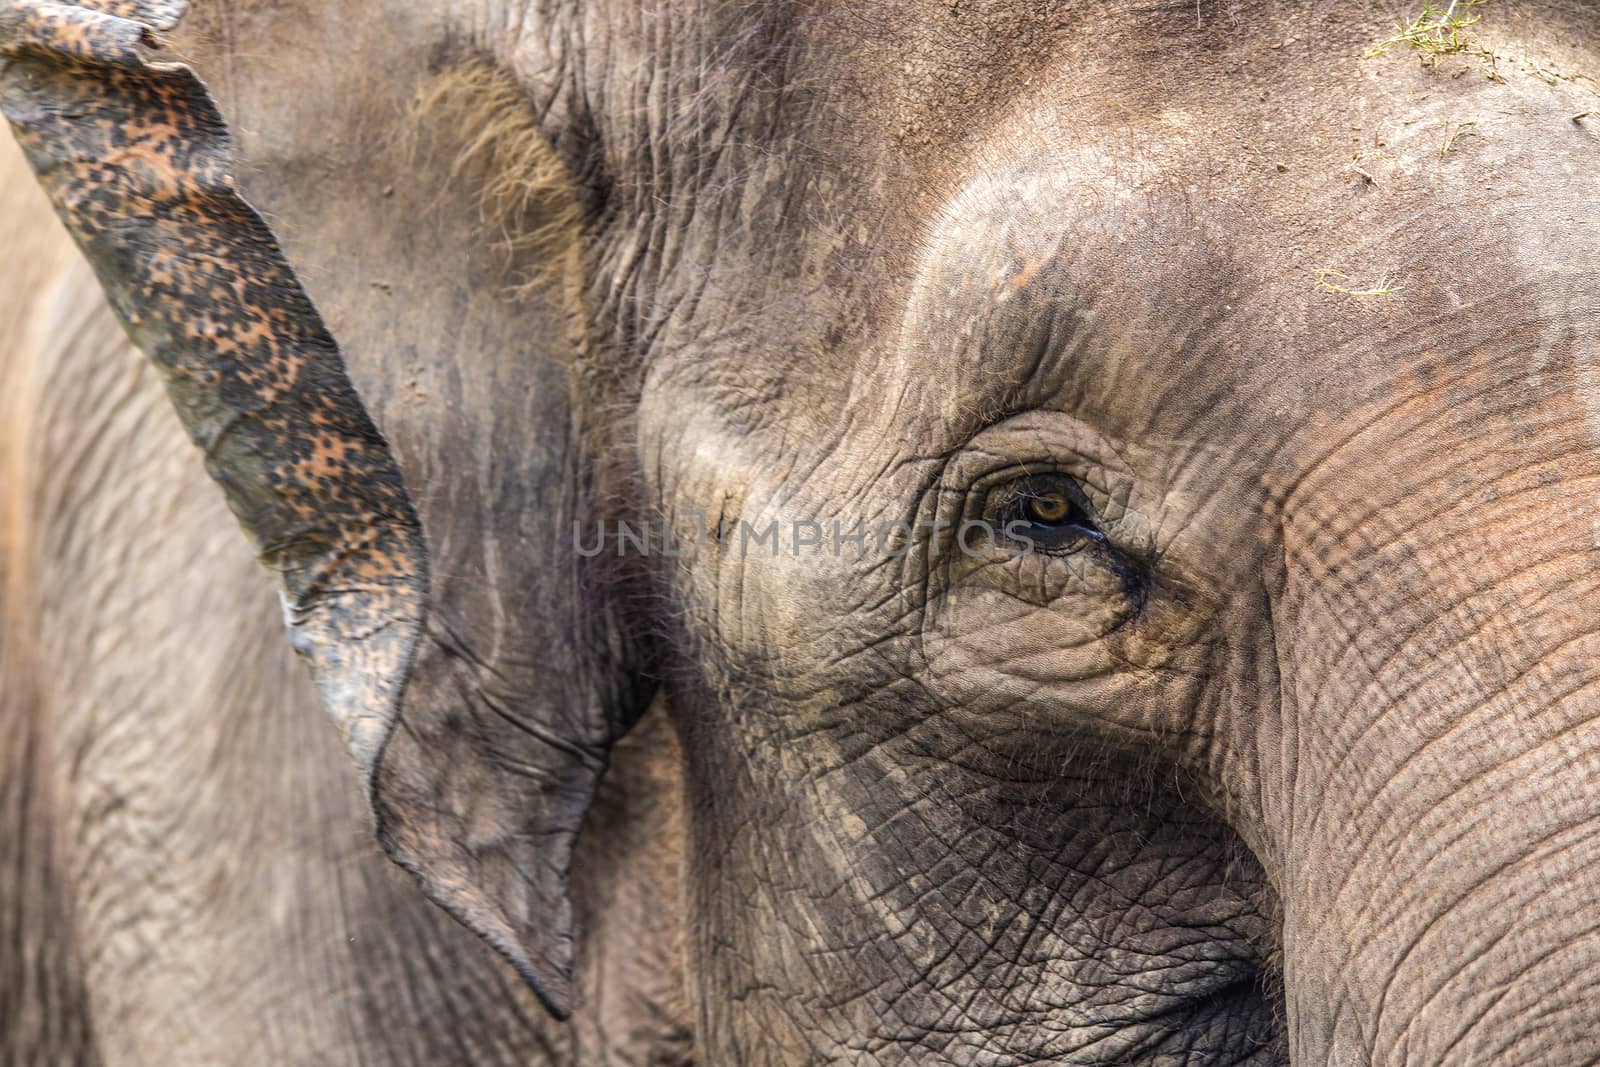 Elephant face by truphoto